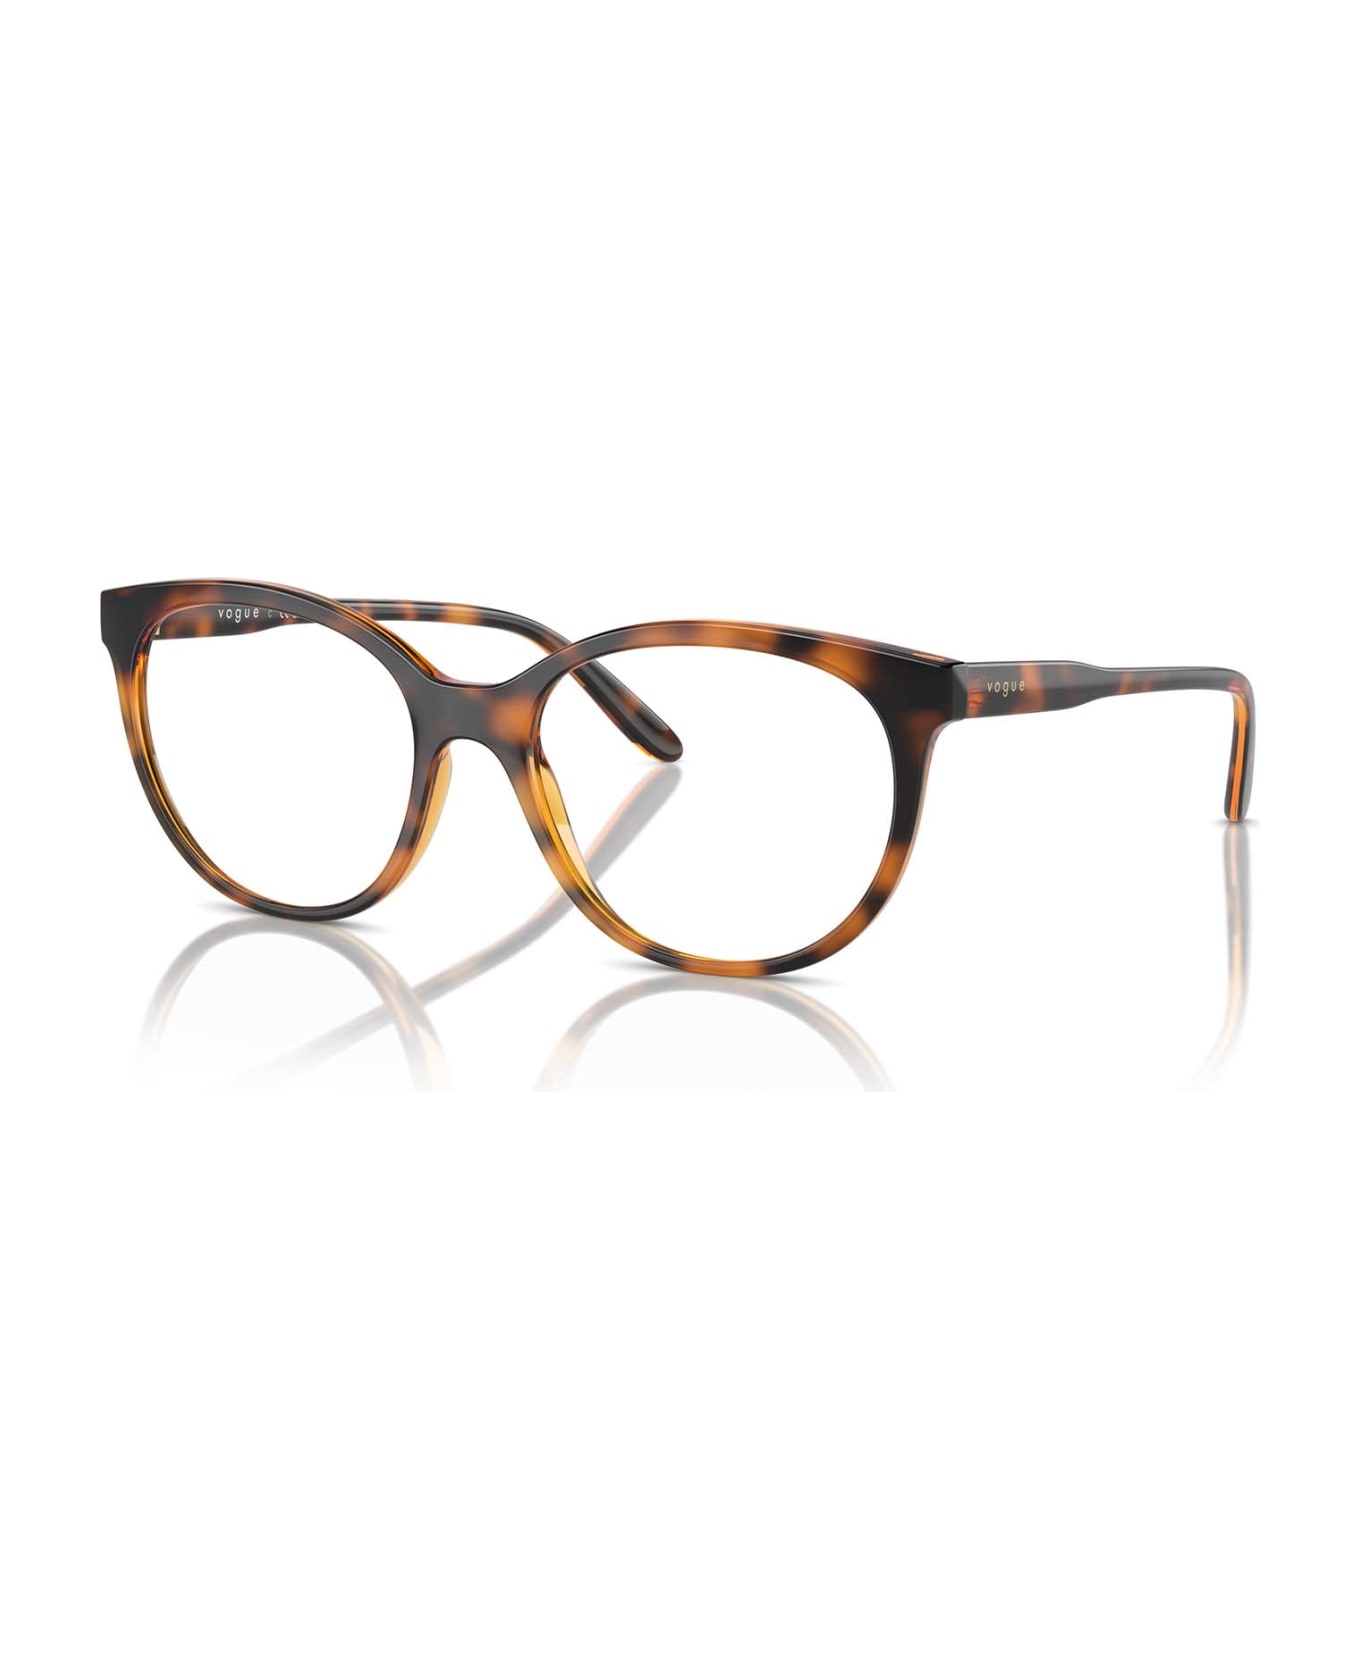 Vogue Eyewear Vo5552 Dark Havana Glasses - Dark Havana アイウェア